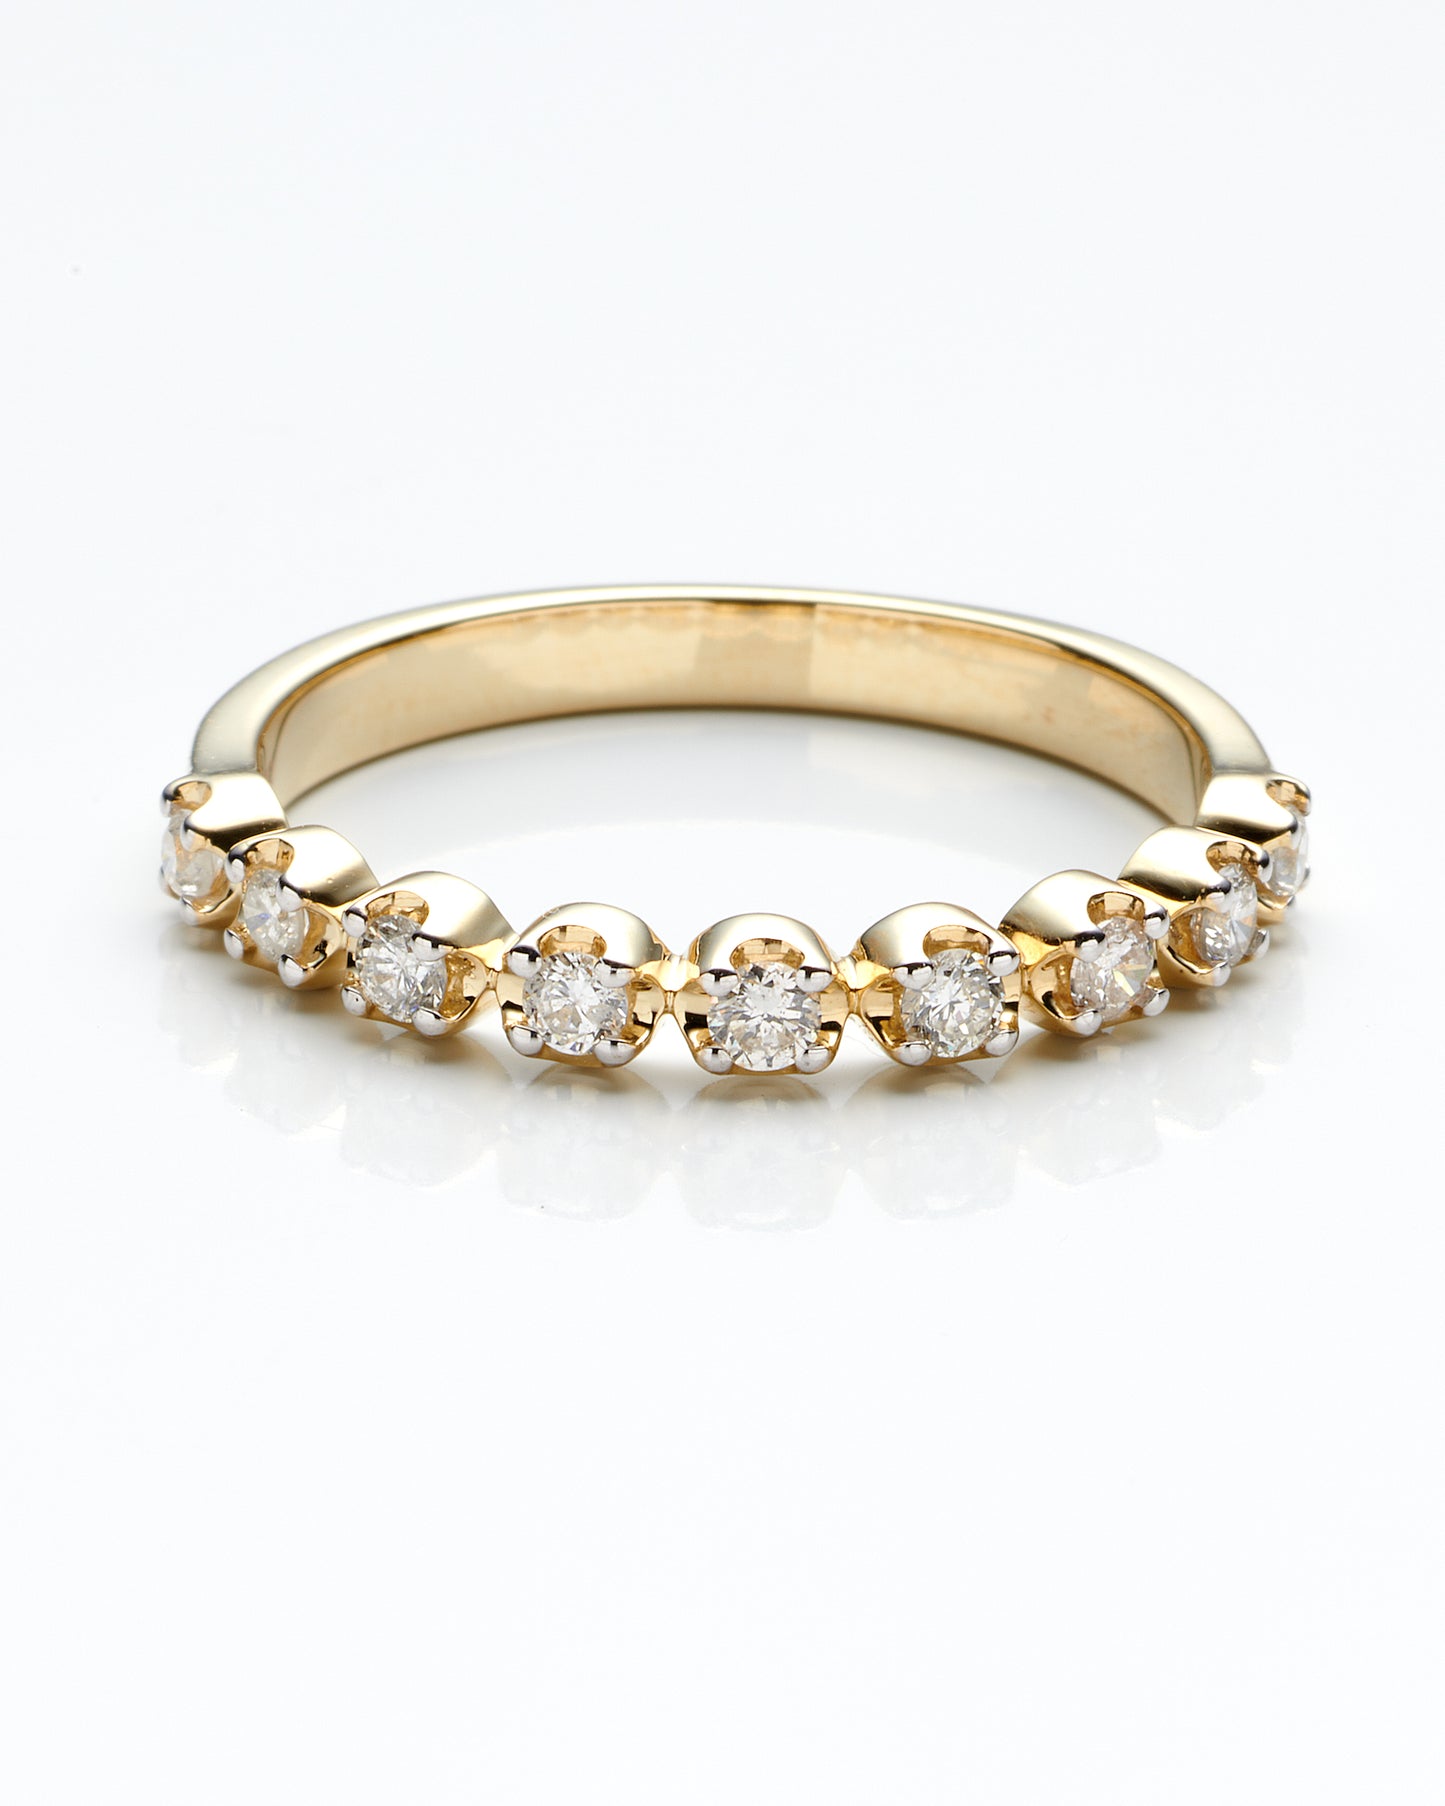 0.25Ctw 10K Yellow Gold Diamond Wedding Band Size 7  1.2Dwt